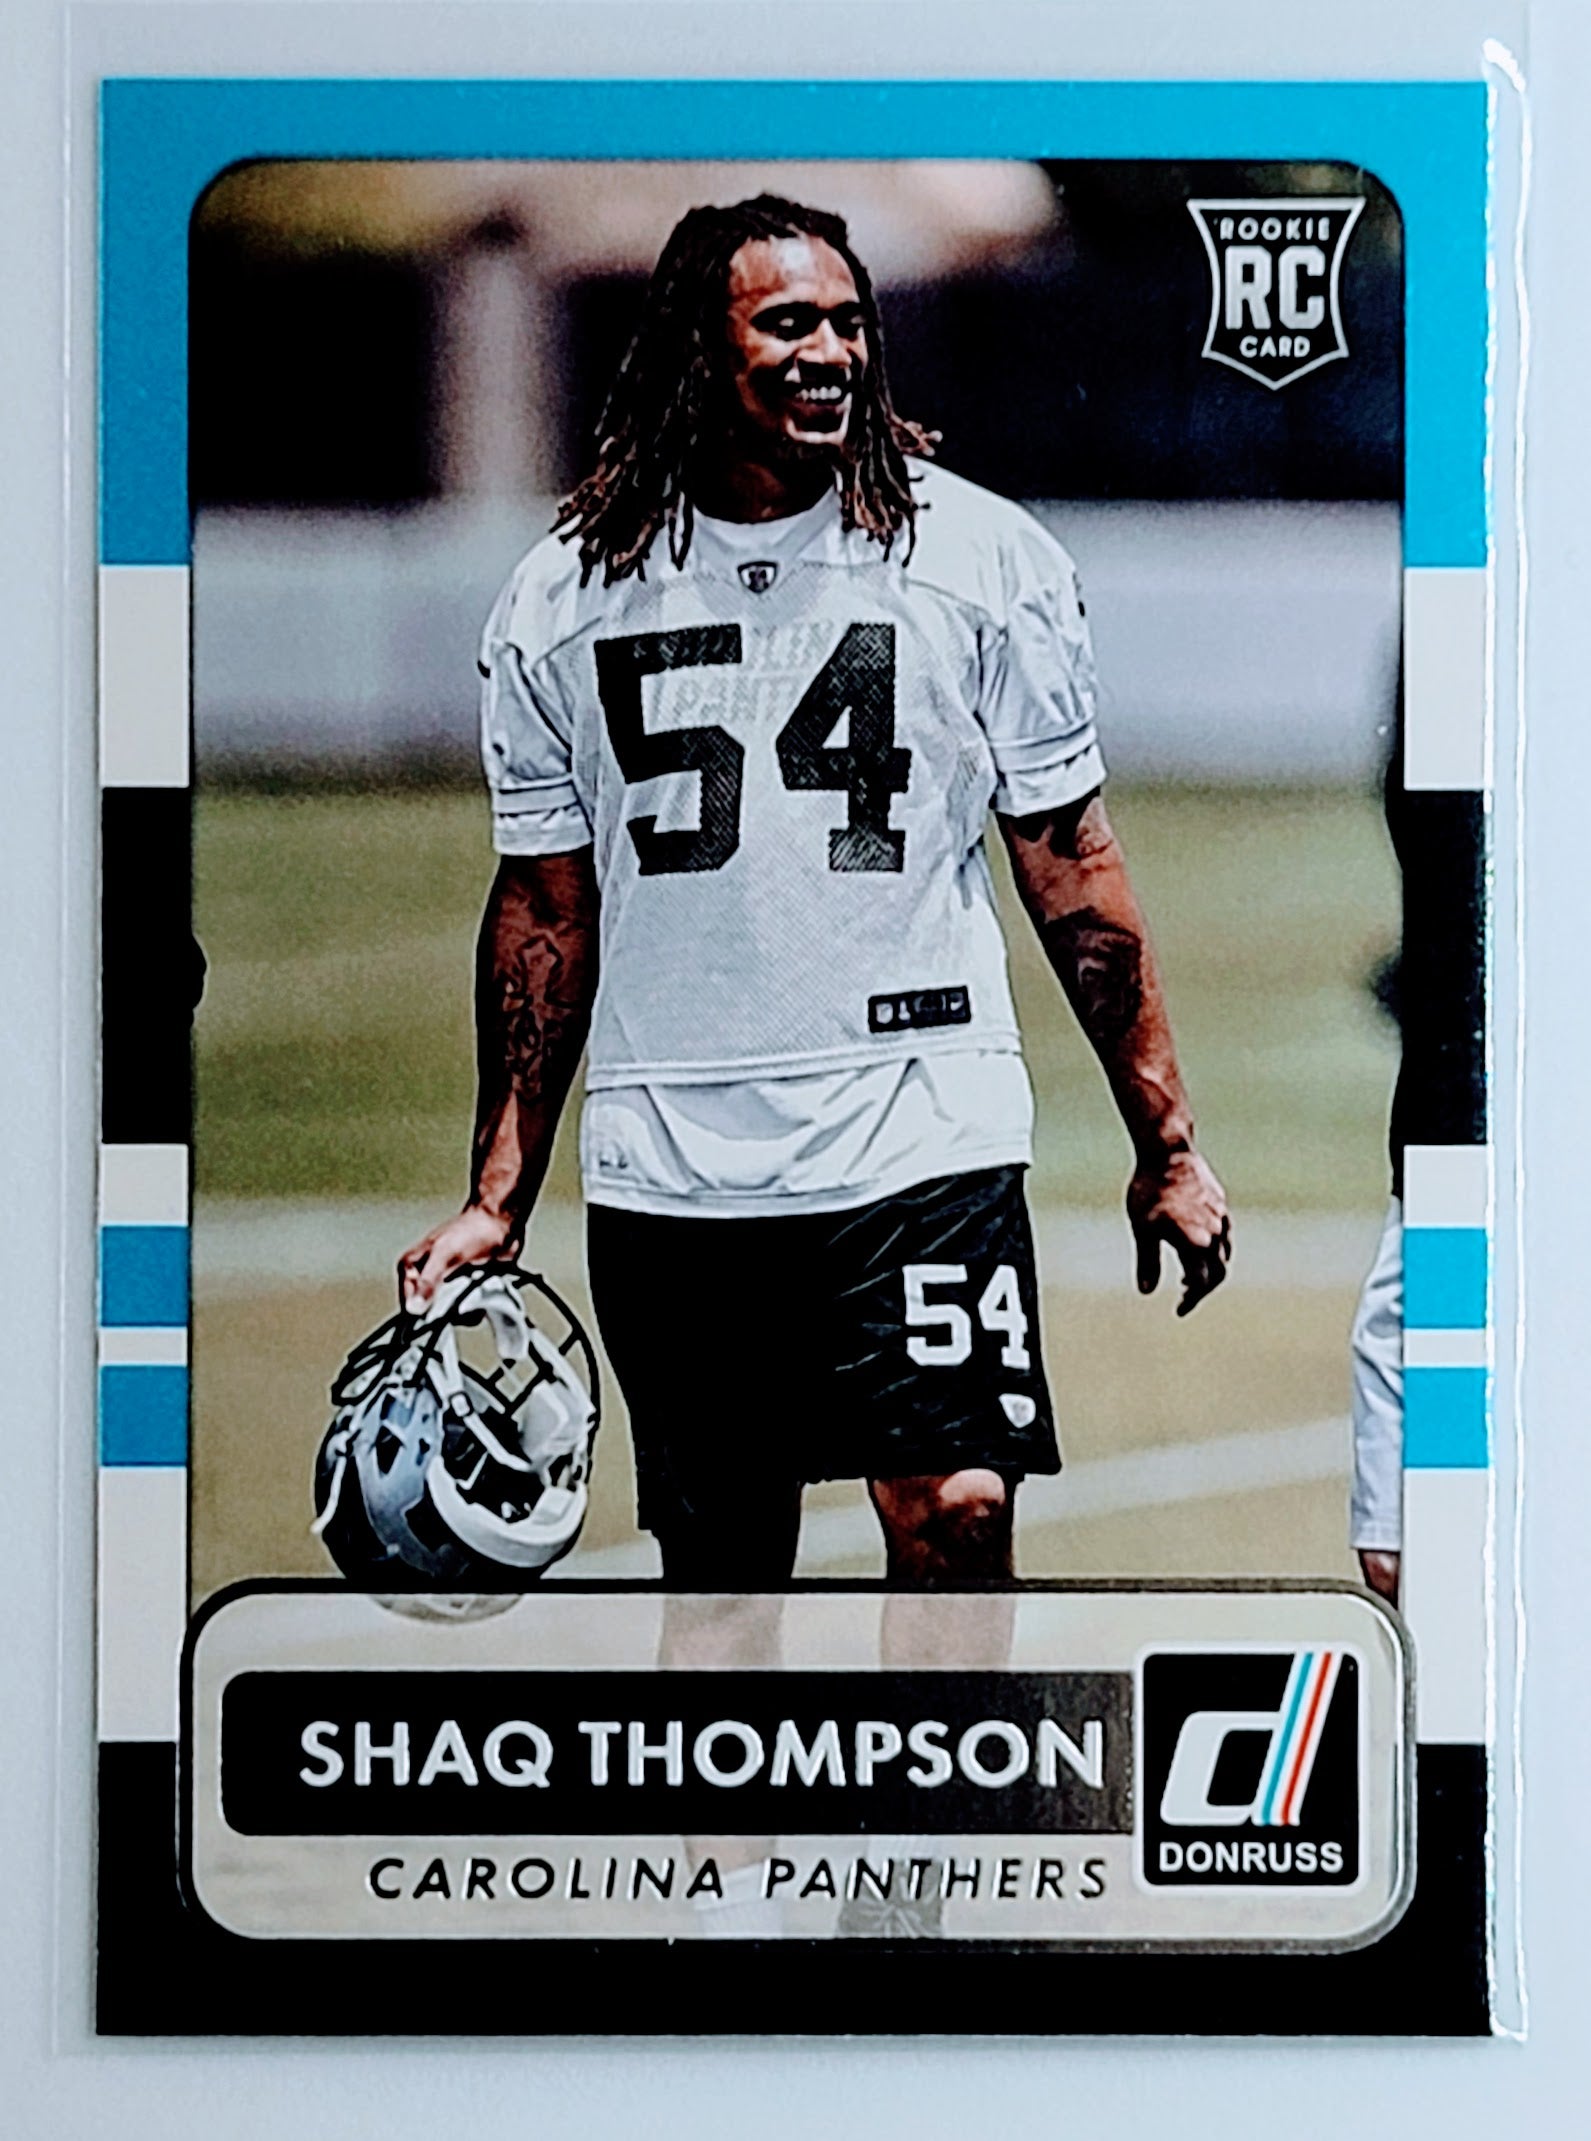 2015 Donruss Shaq
Thompson RC Carolina Panthers
  Football Card TH1C4 simple Xclusive Collectibles   